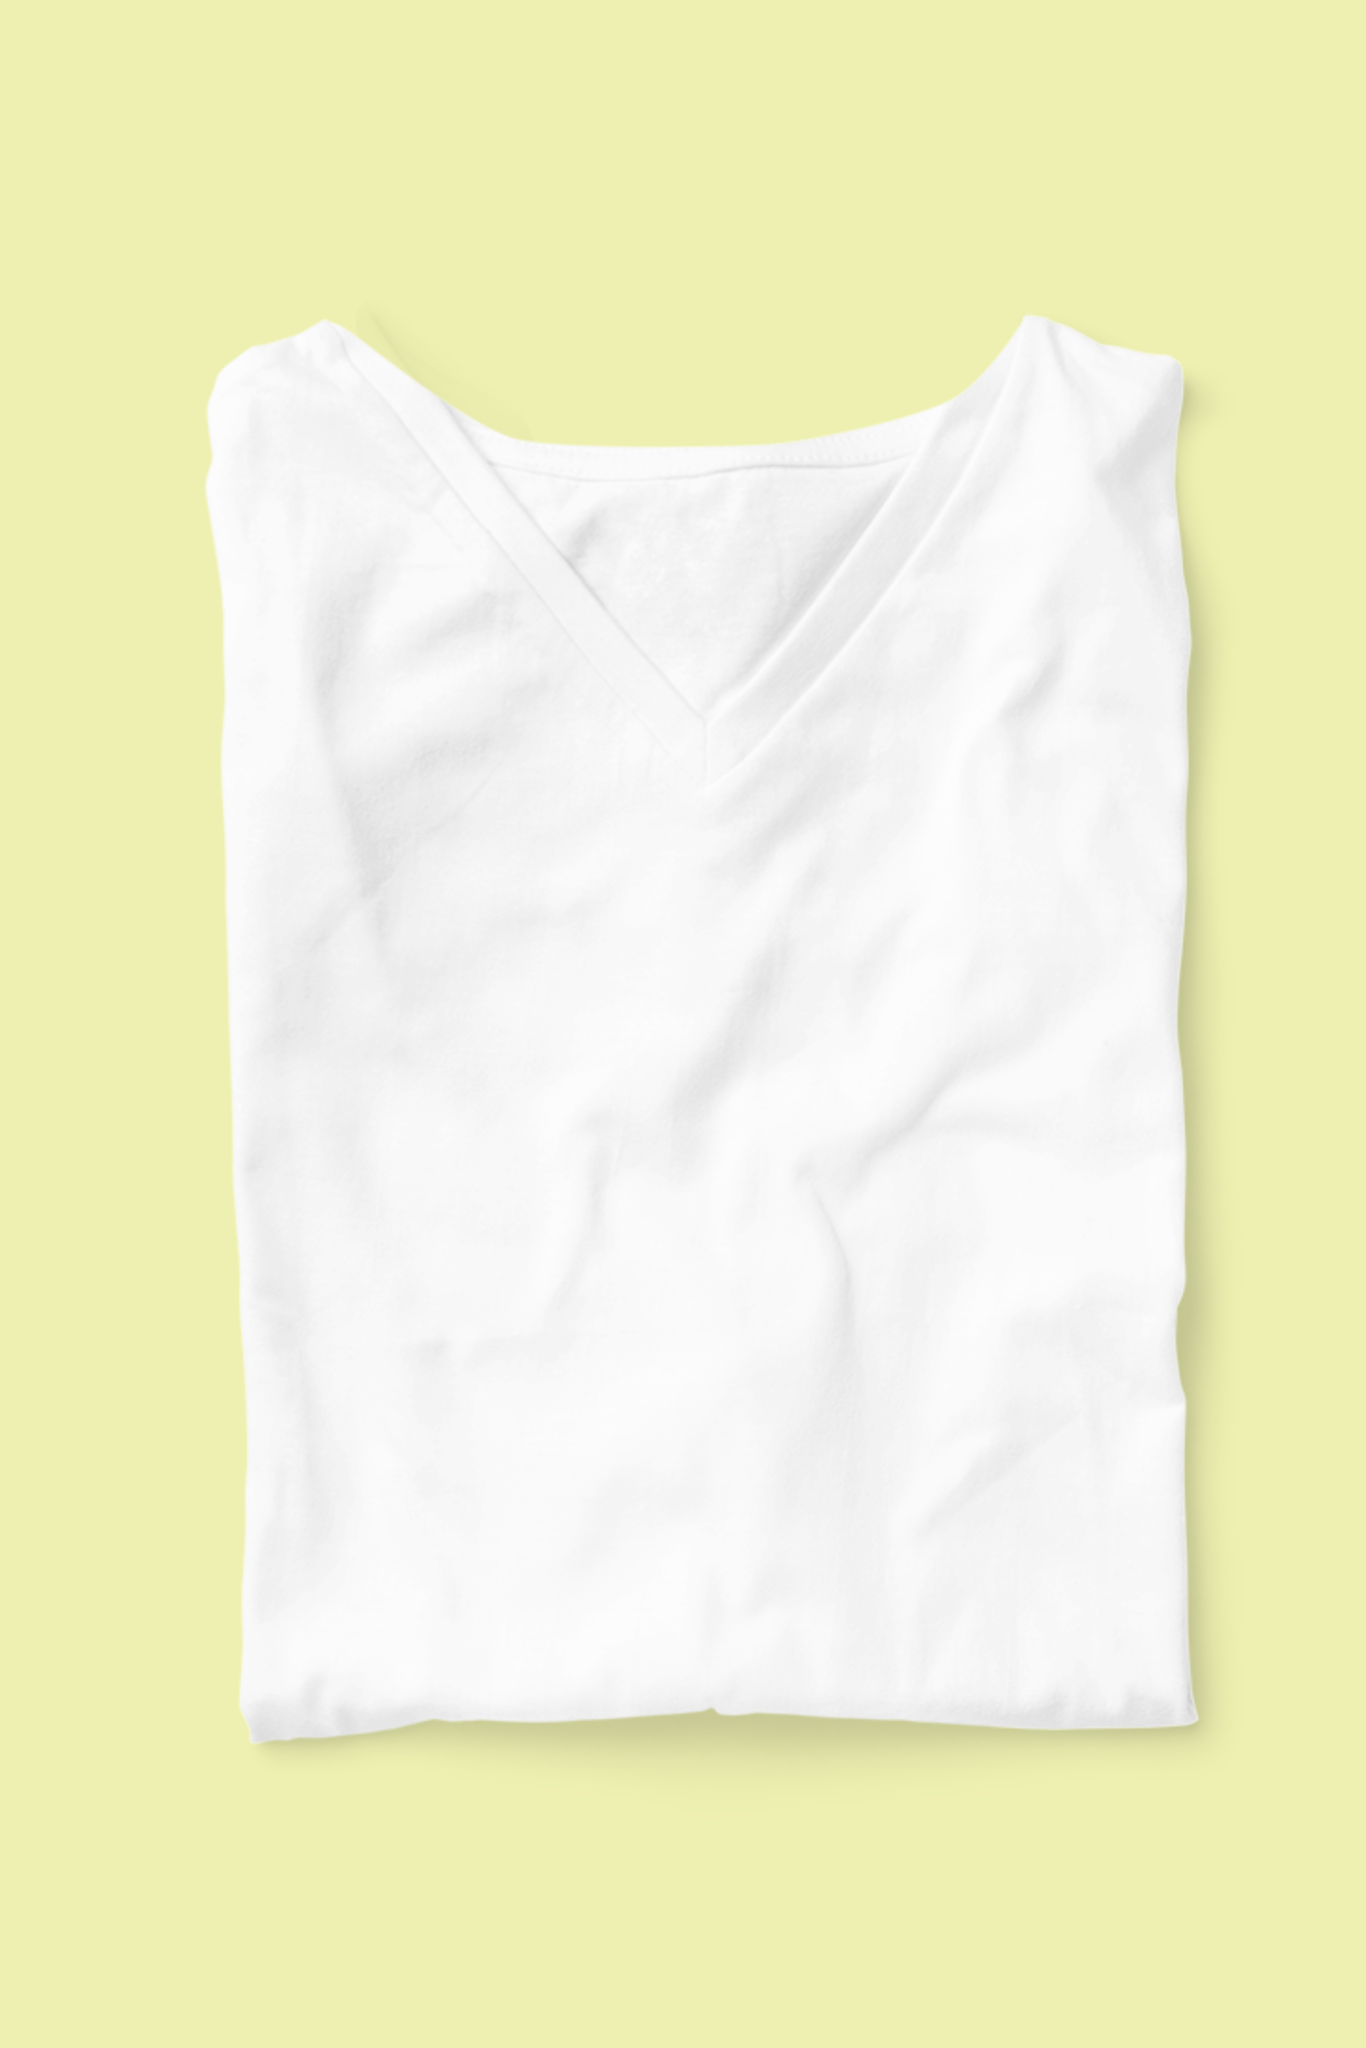 Men's V-Neck: White T-Shirt